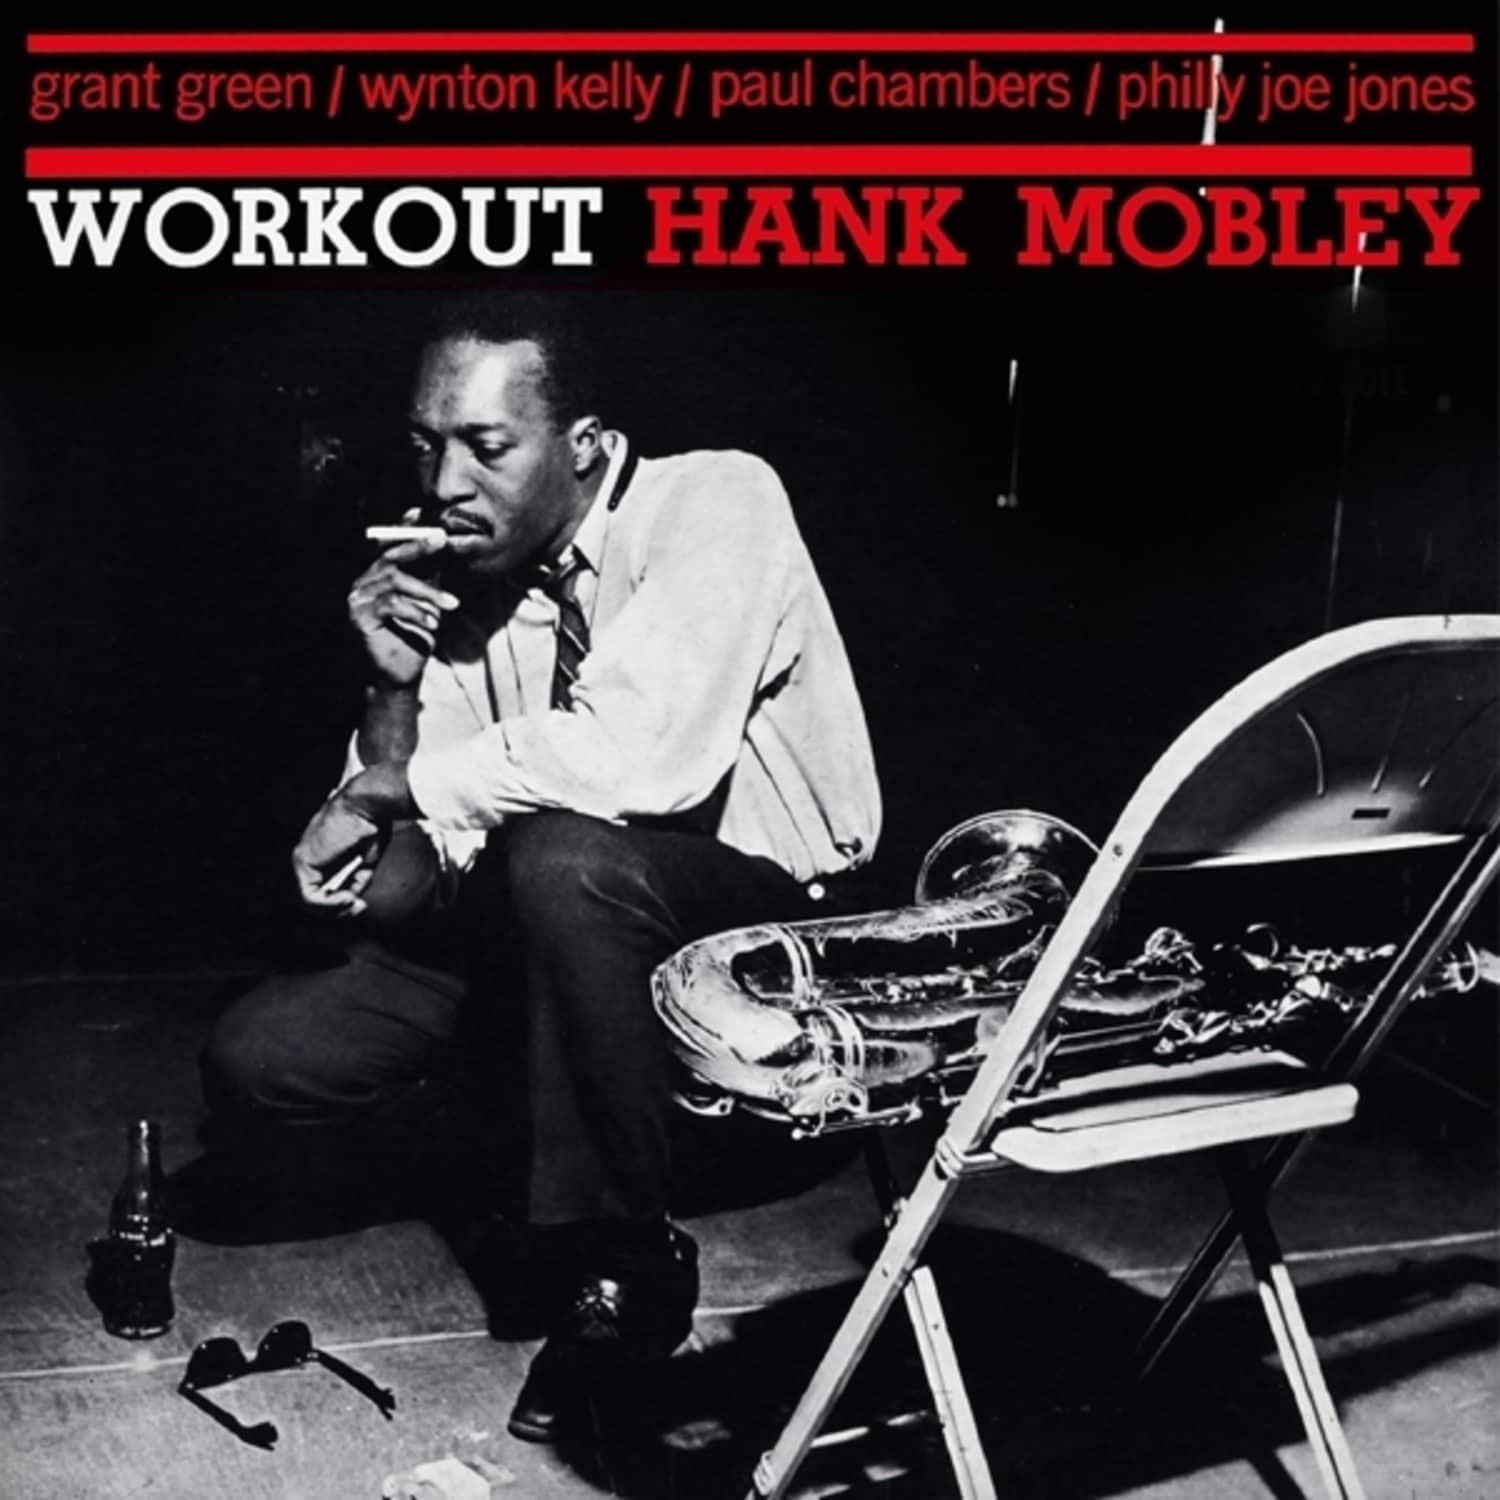  Hank Mobley - WORKOUT 